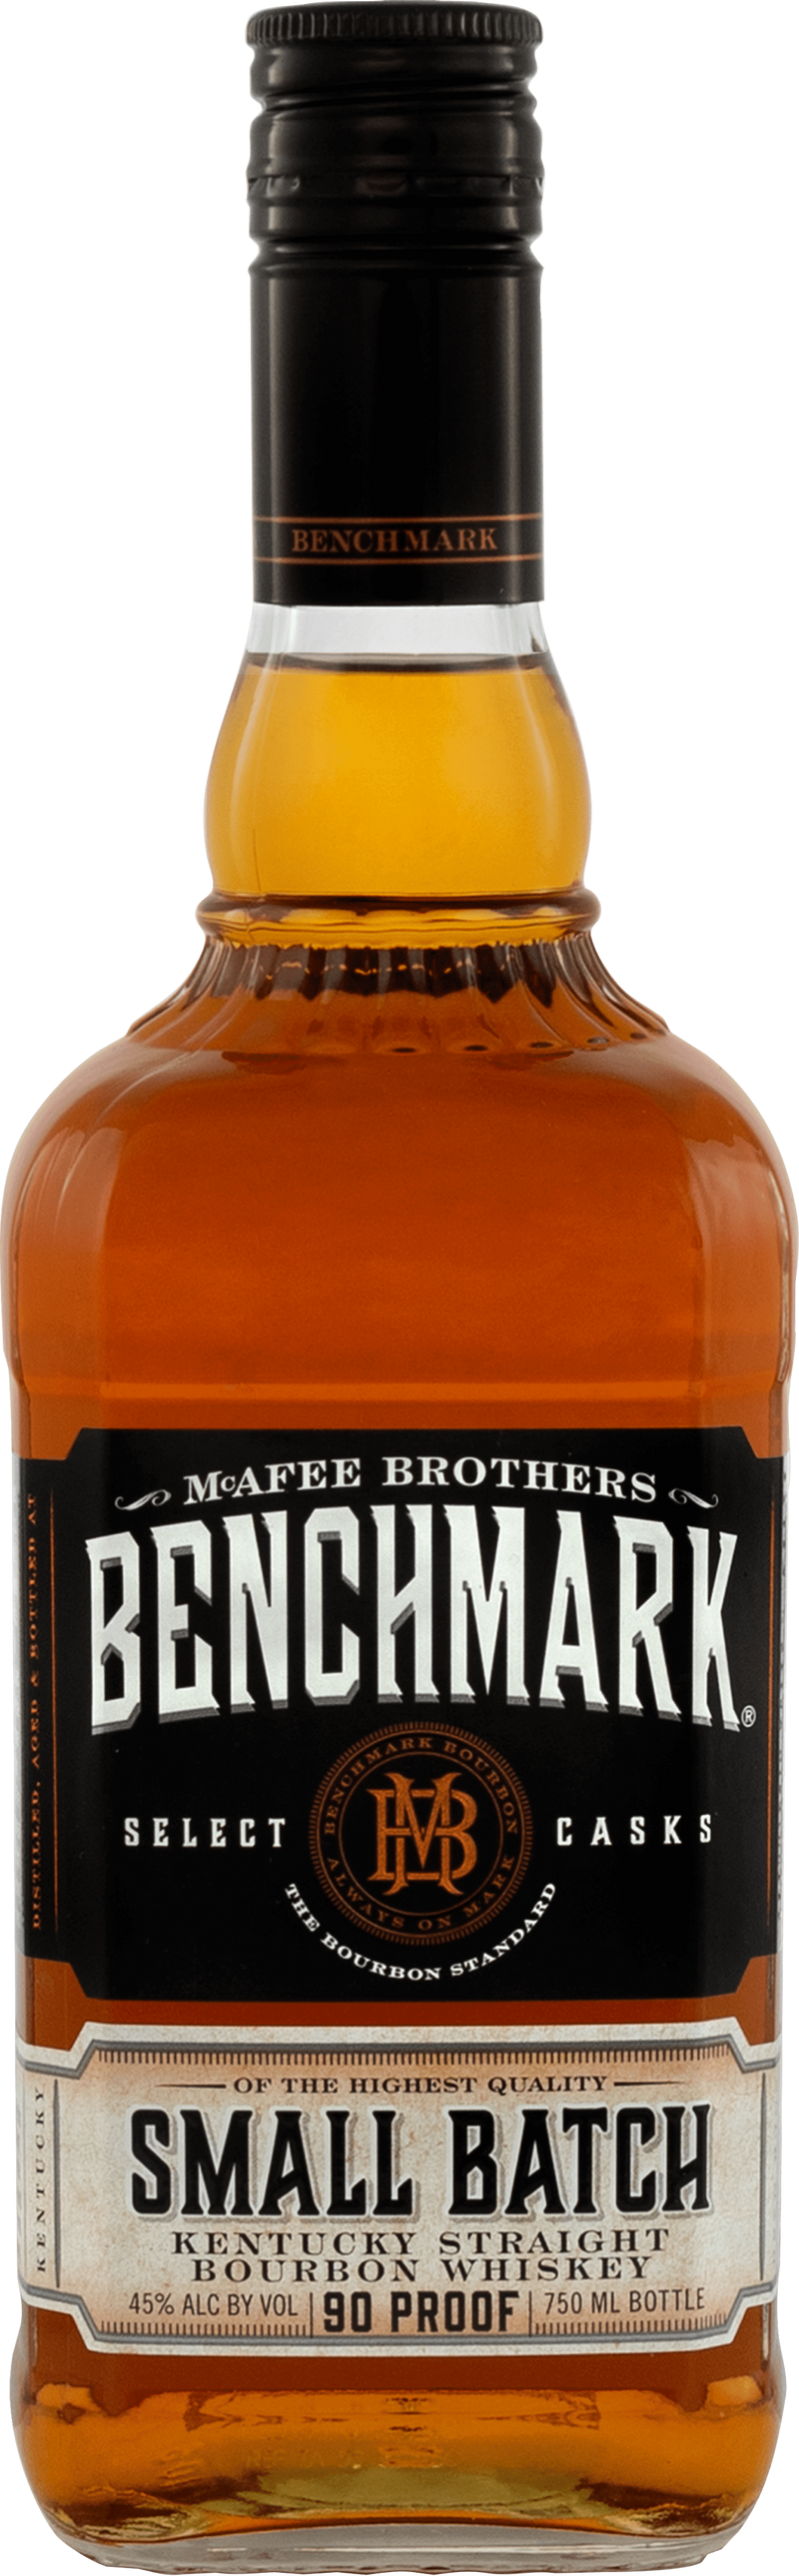 Benchmark Small Batch Bourbon Whiskey